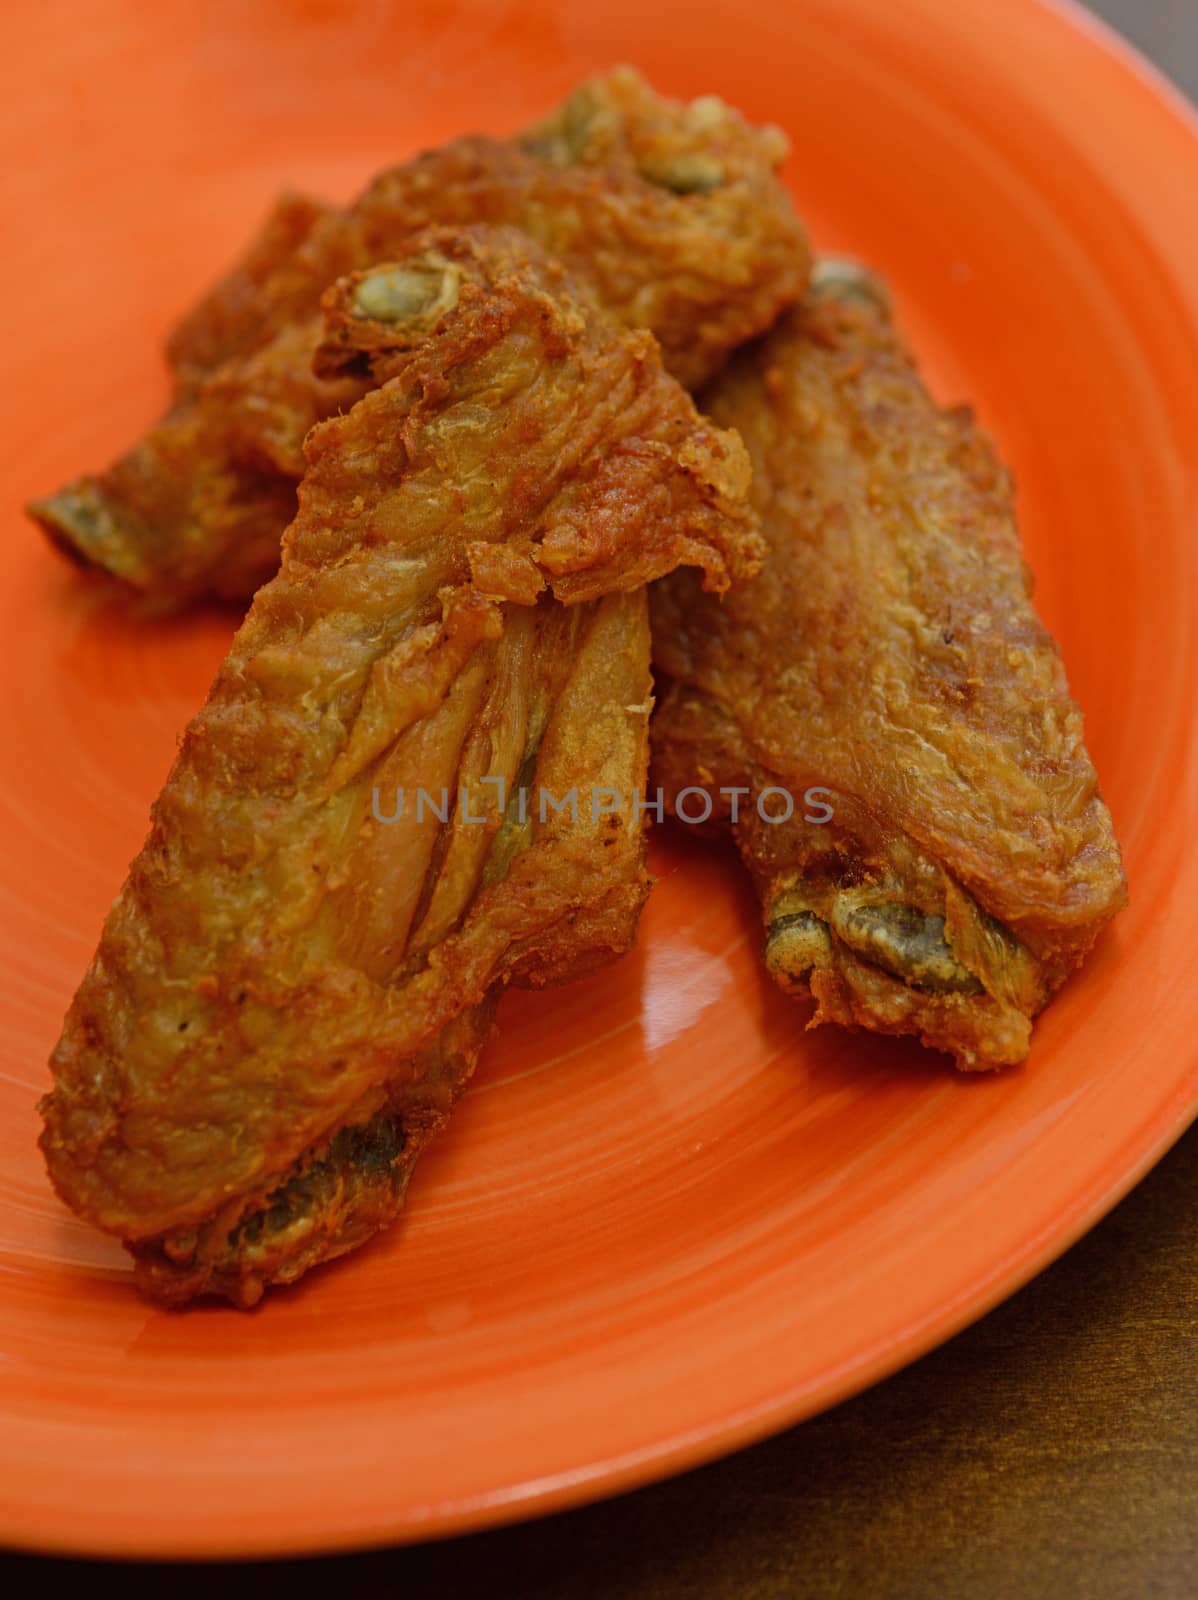 fried chicken wings by ftlaudgirl